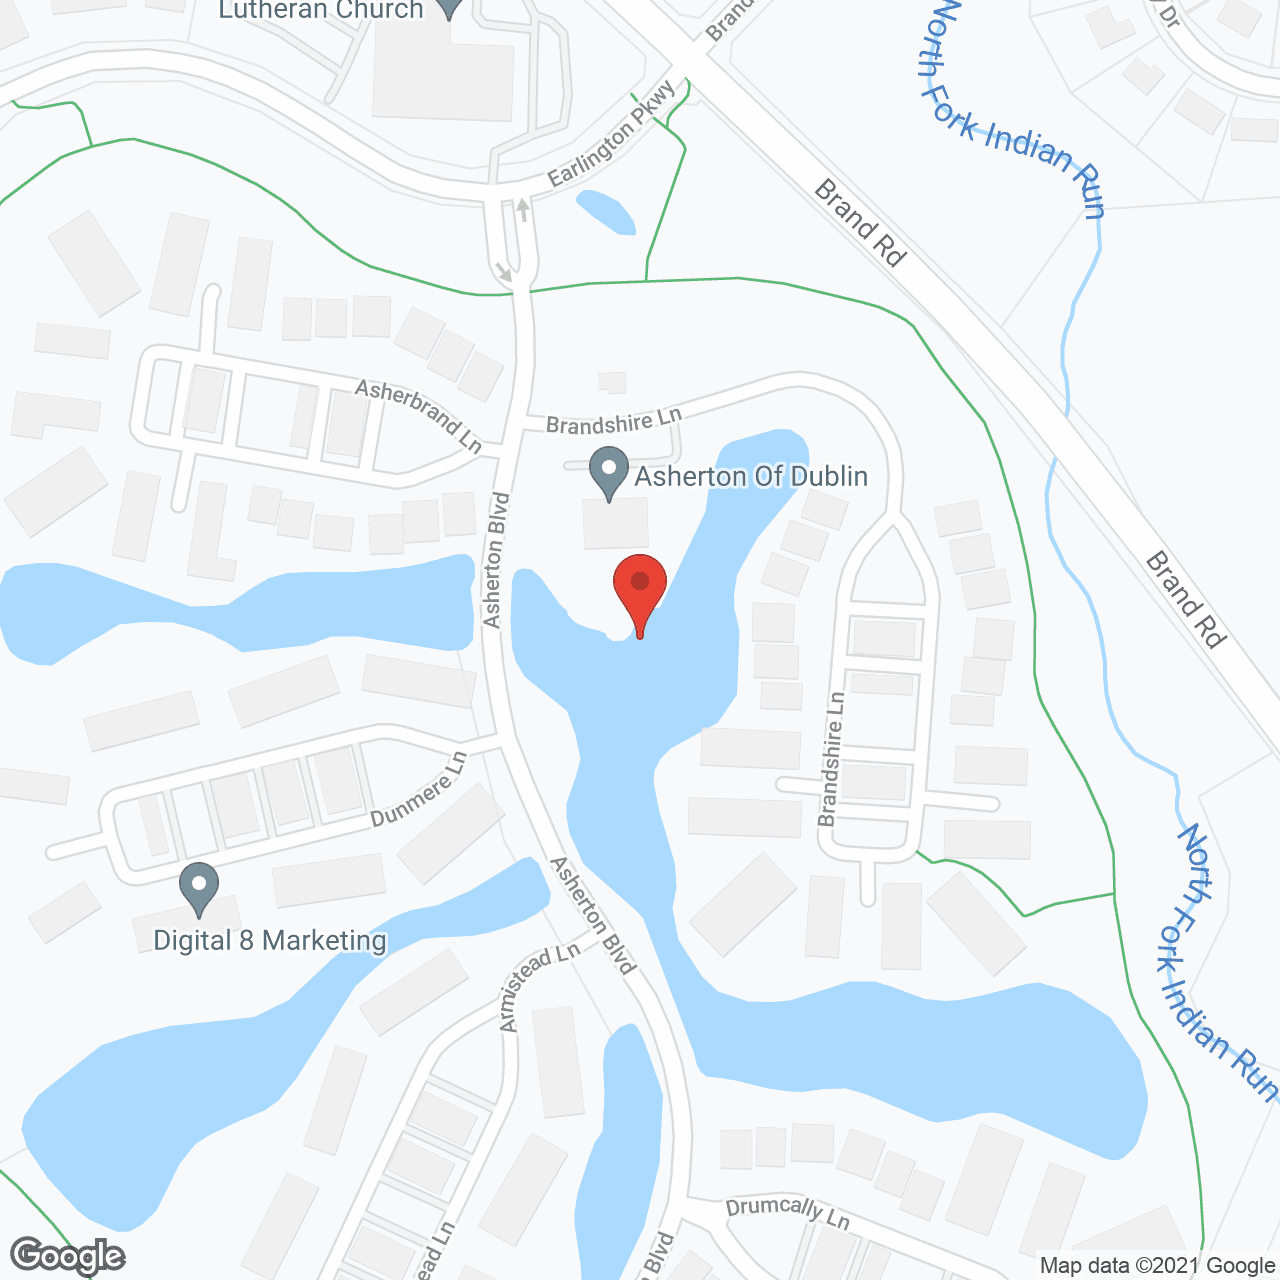 Asherton of Dublin in google map